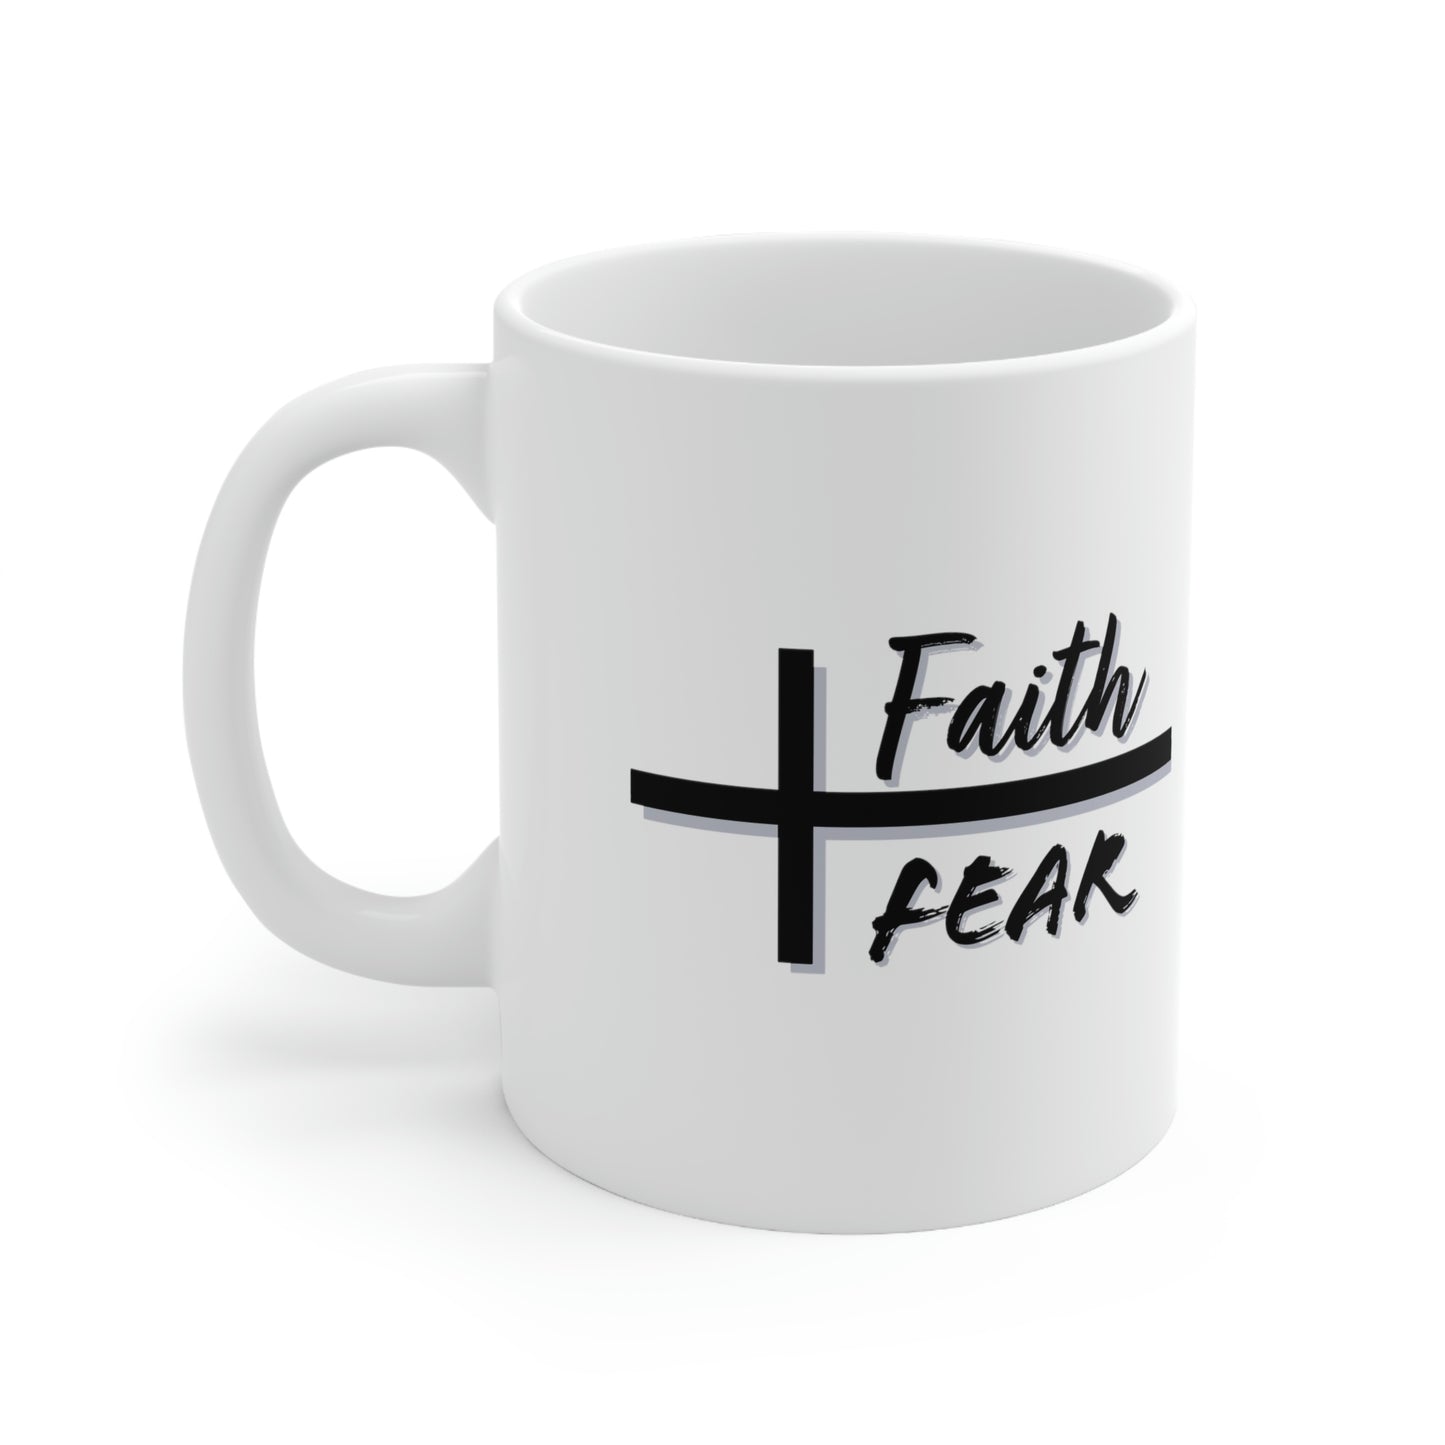 Inspirational Coffee Cup, Boho Christian, Bible Verse Coffee Mug, Positive Coffee Cup